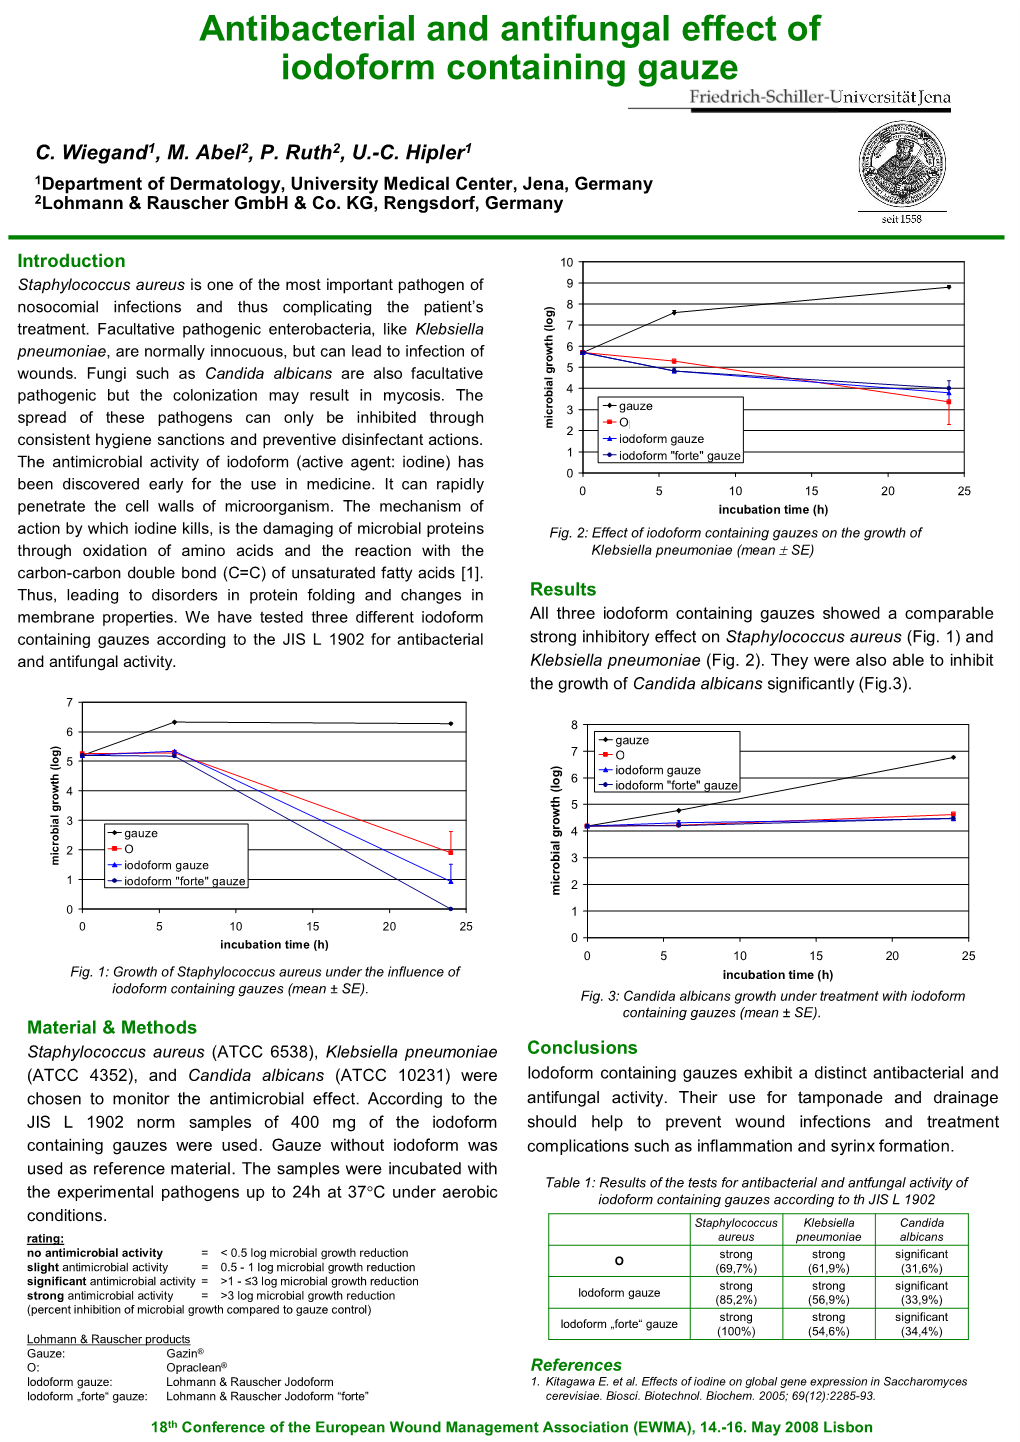 Antibacterial and Antifungal Effect of Iodoform Containing Gauze